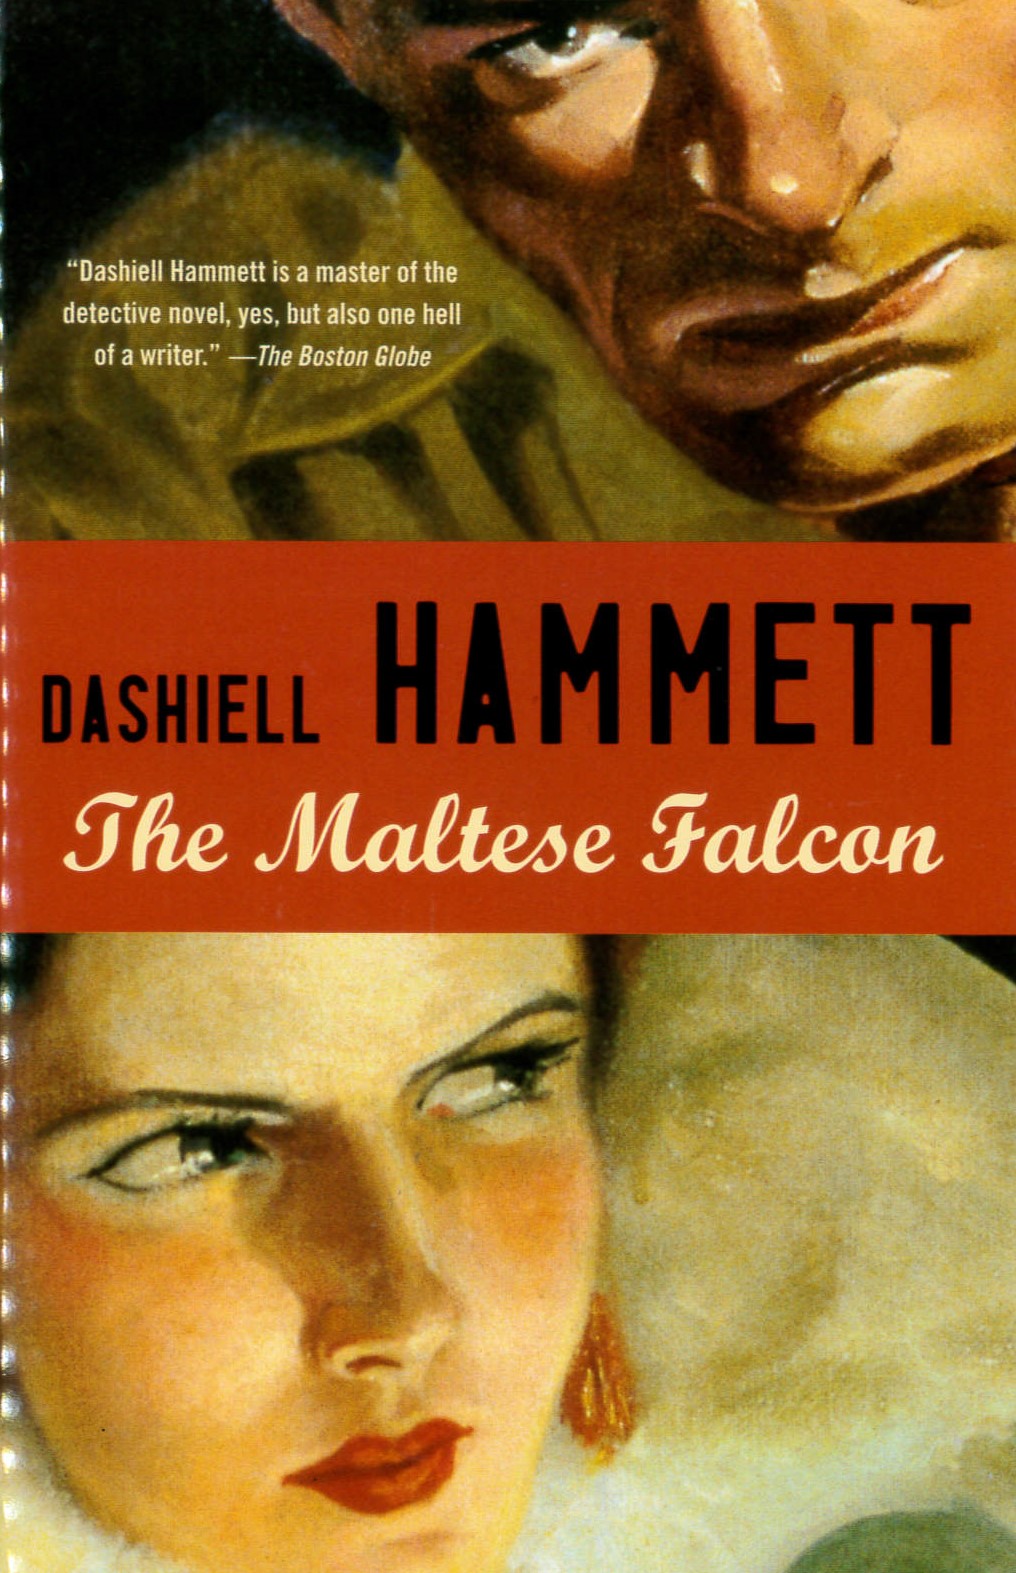 The Maltese falcon /